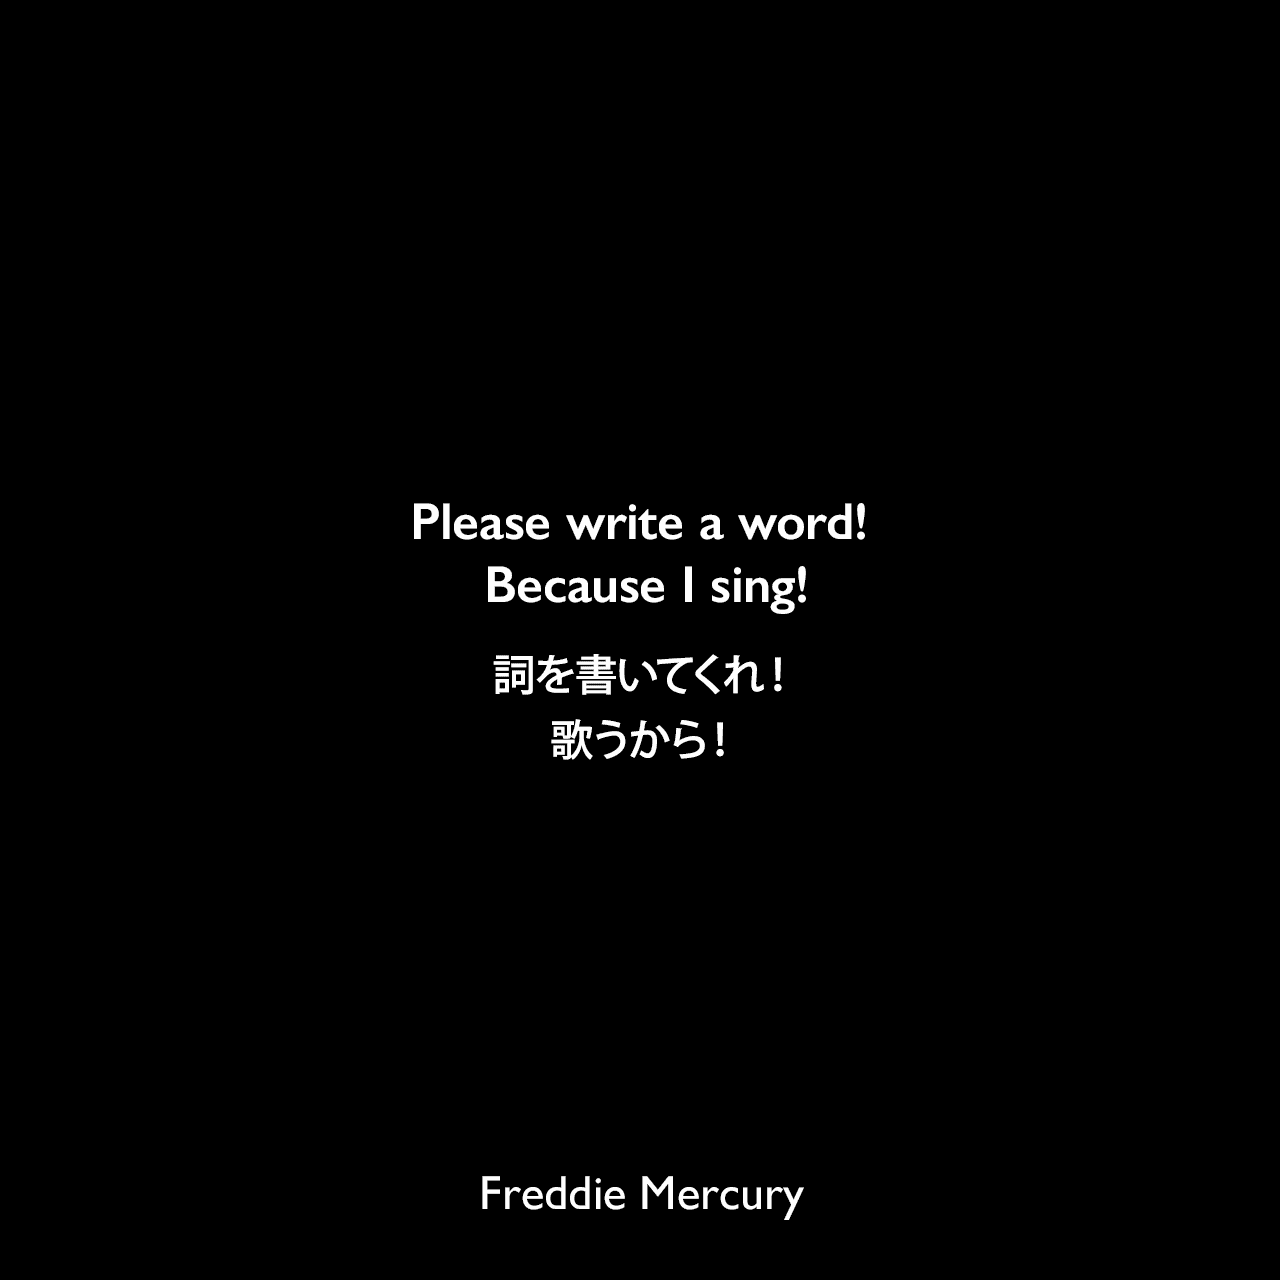 Please write a word! Because I sing!詞を書いてくれ！歌うから！Freddie Mercury